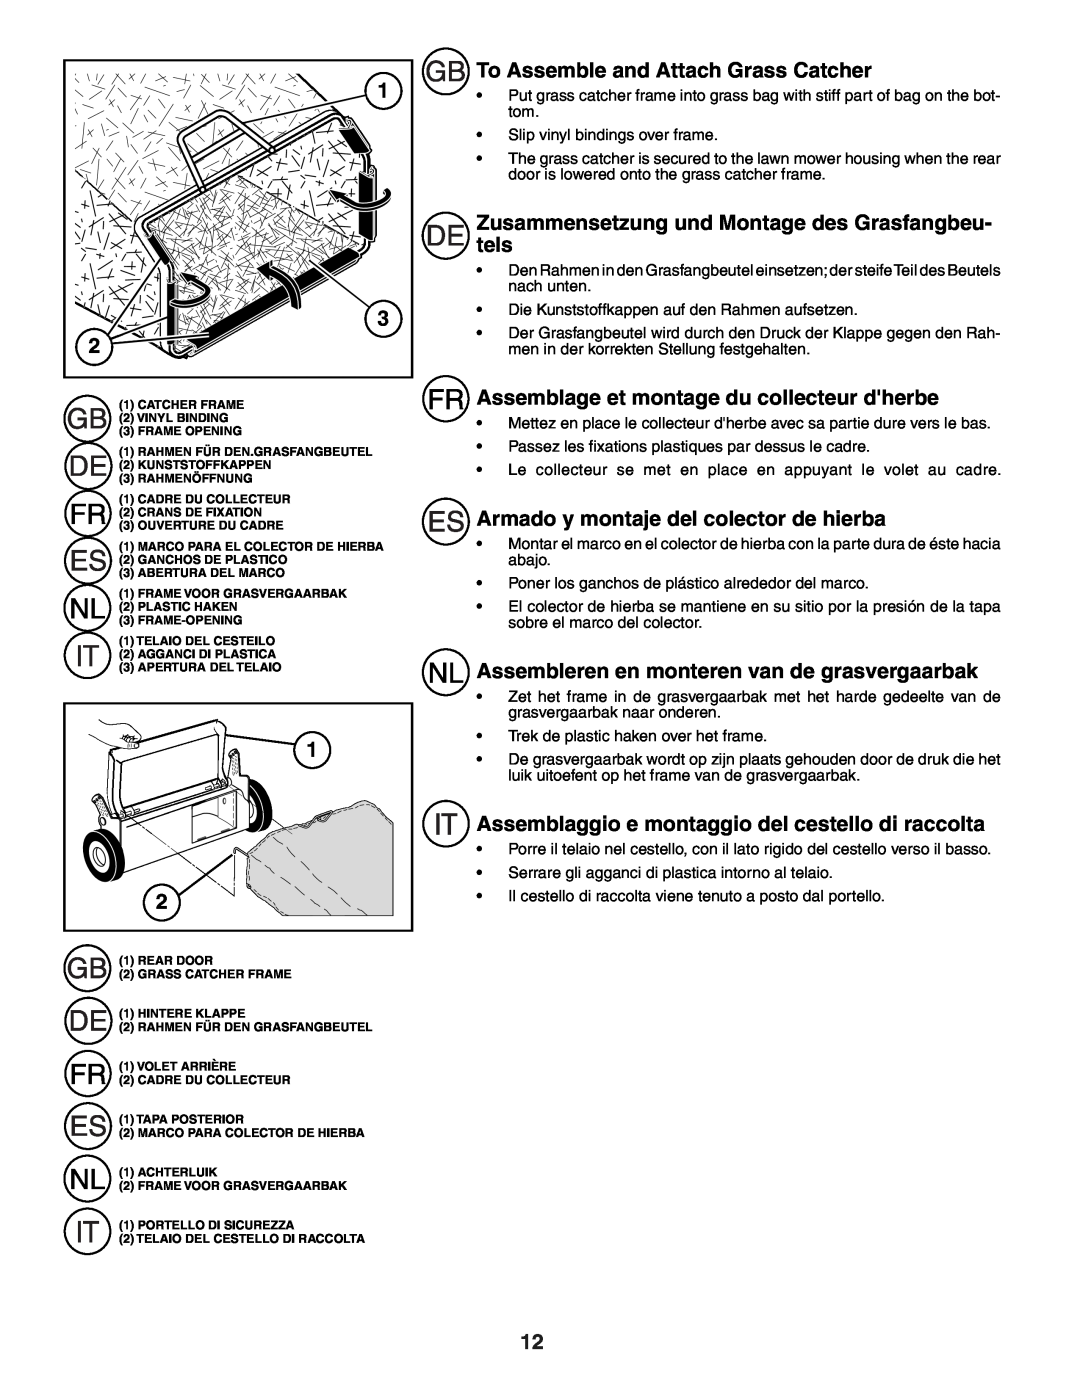 Husqvarna R52SE instruction manual To Assemble and Attach Grass Catcher, Zusammensetzung und Montage des Grasfangbeu- tels 